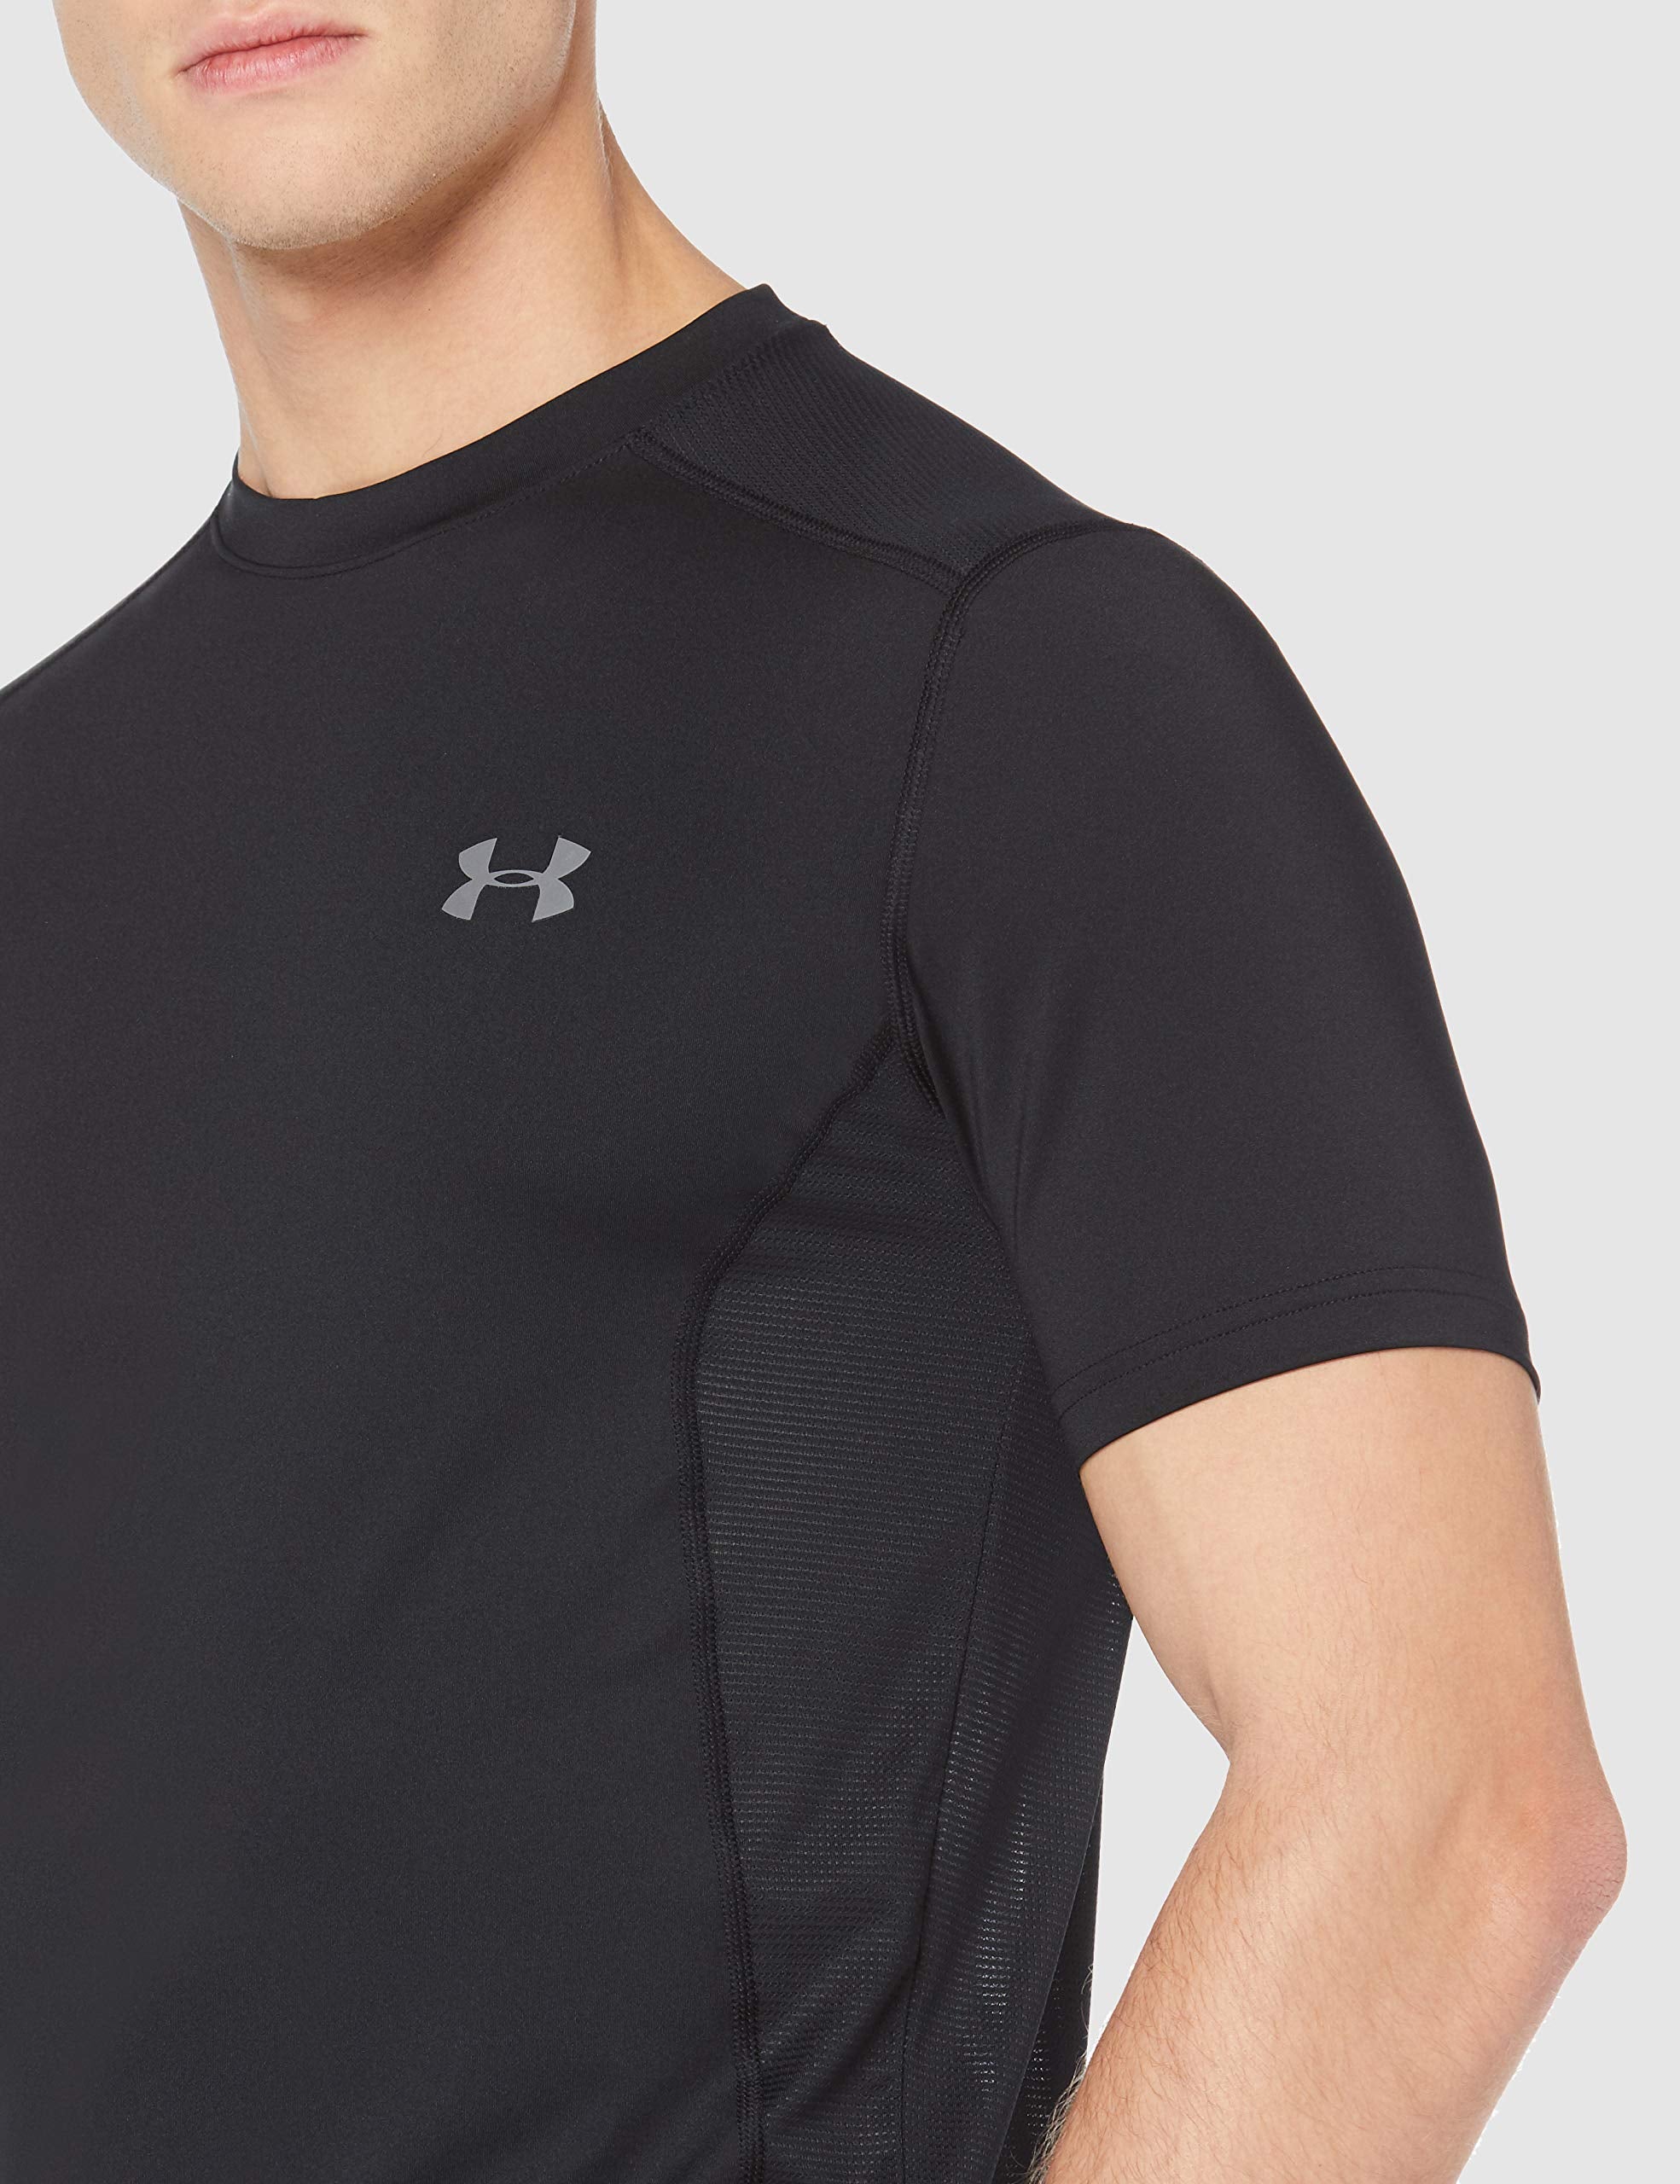 Under Armour Men's Raid Short Sleeve T-Shirt, Black/Graphite